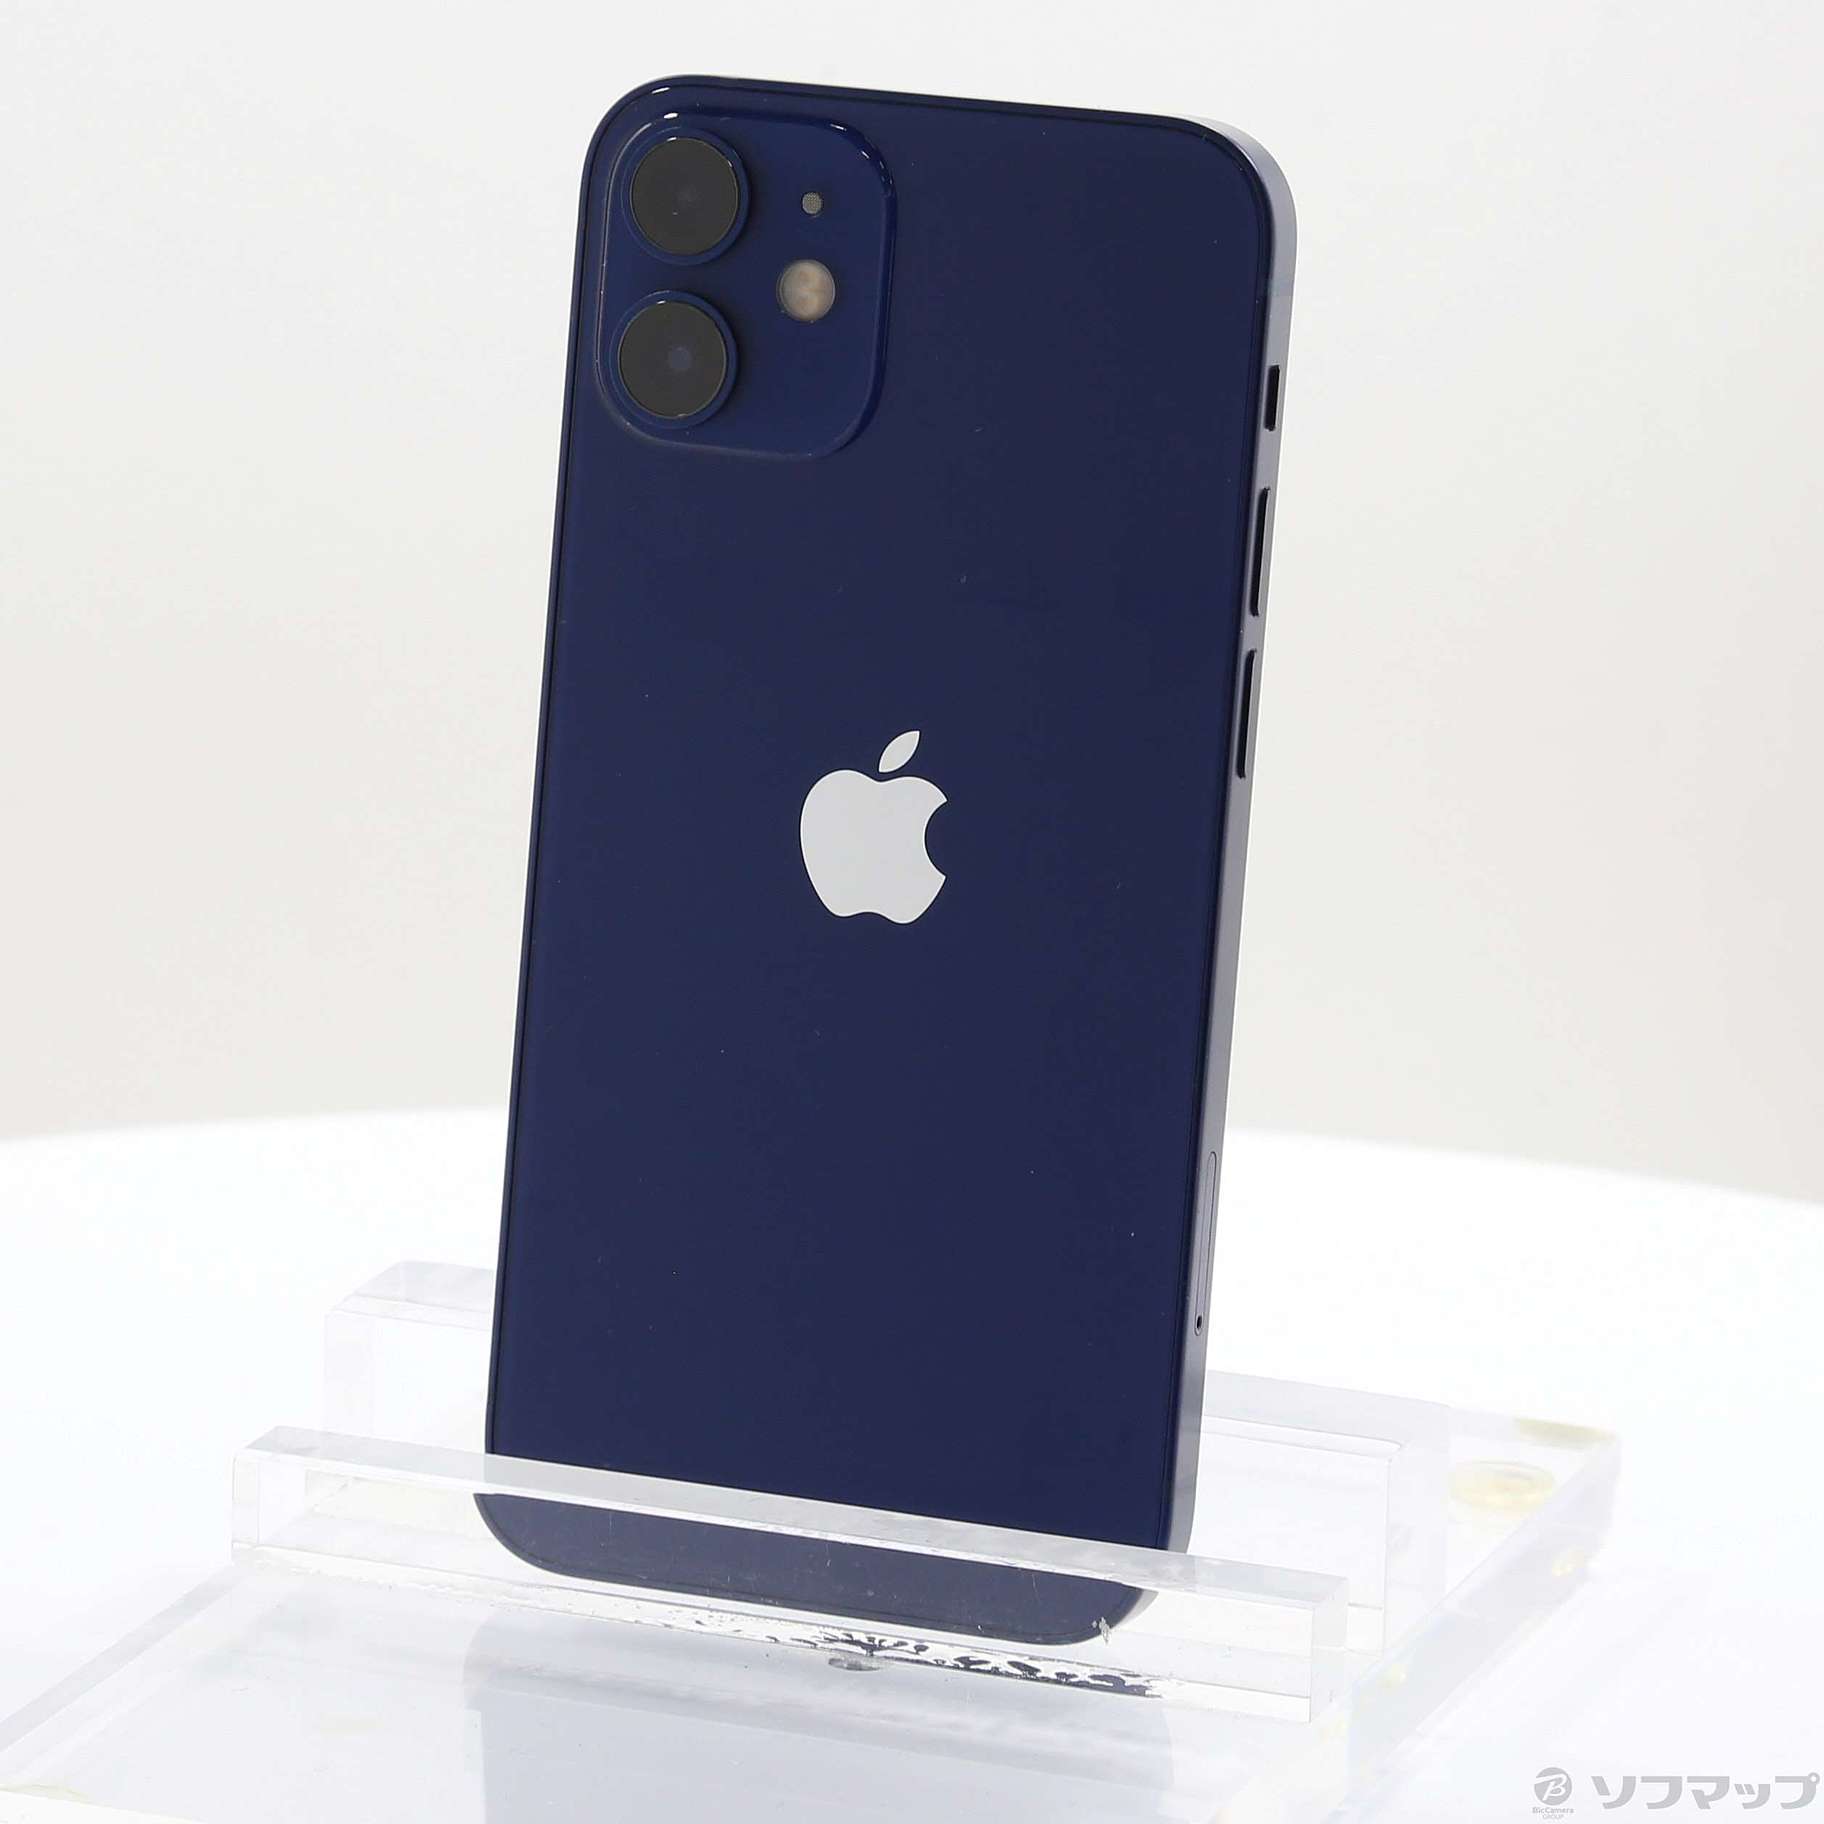 iPhone 12 mini 128GB SIMフリー [ブルー] 中古(白ロム)価格比較 - 価格.com